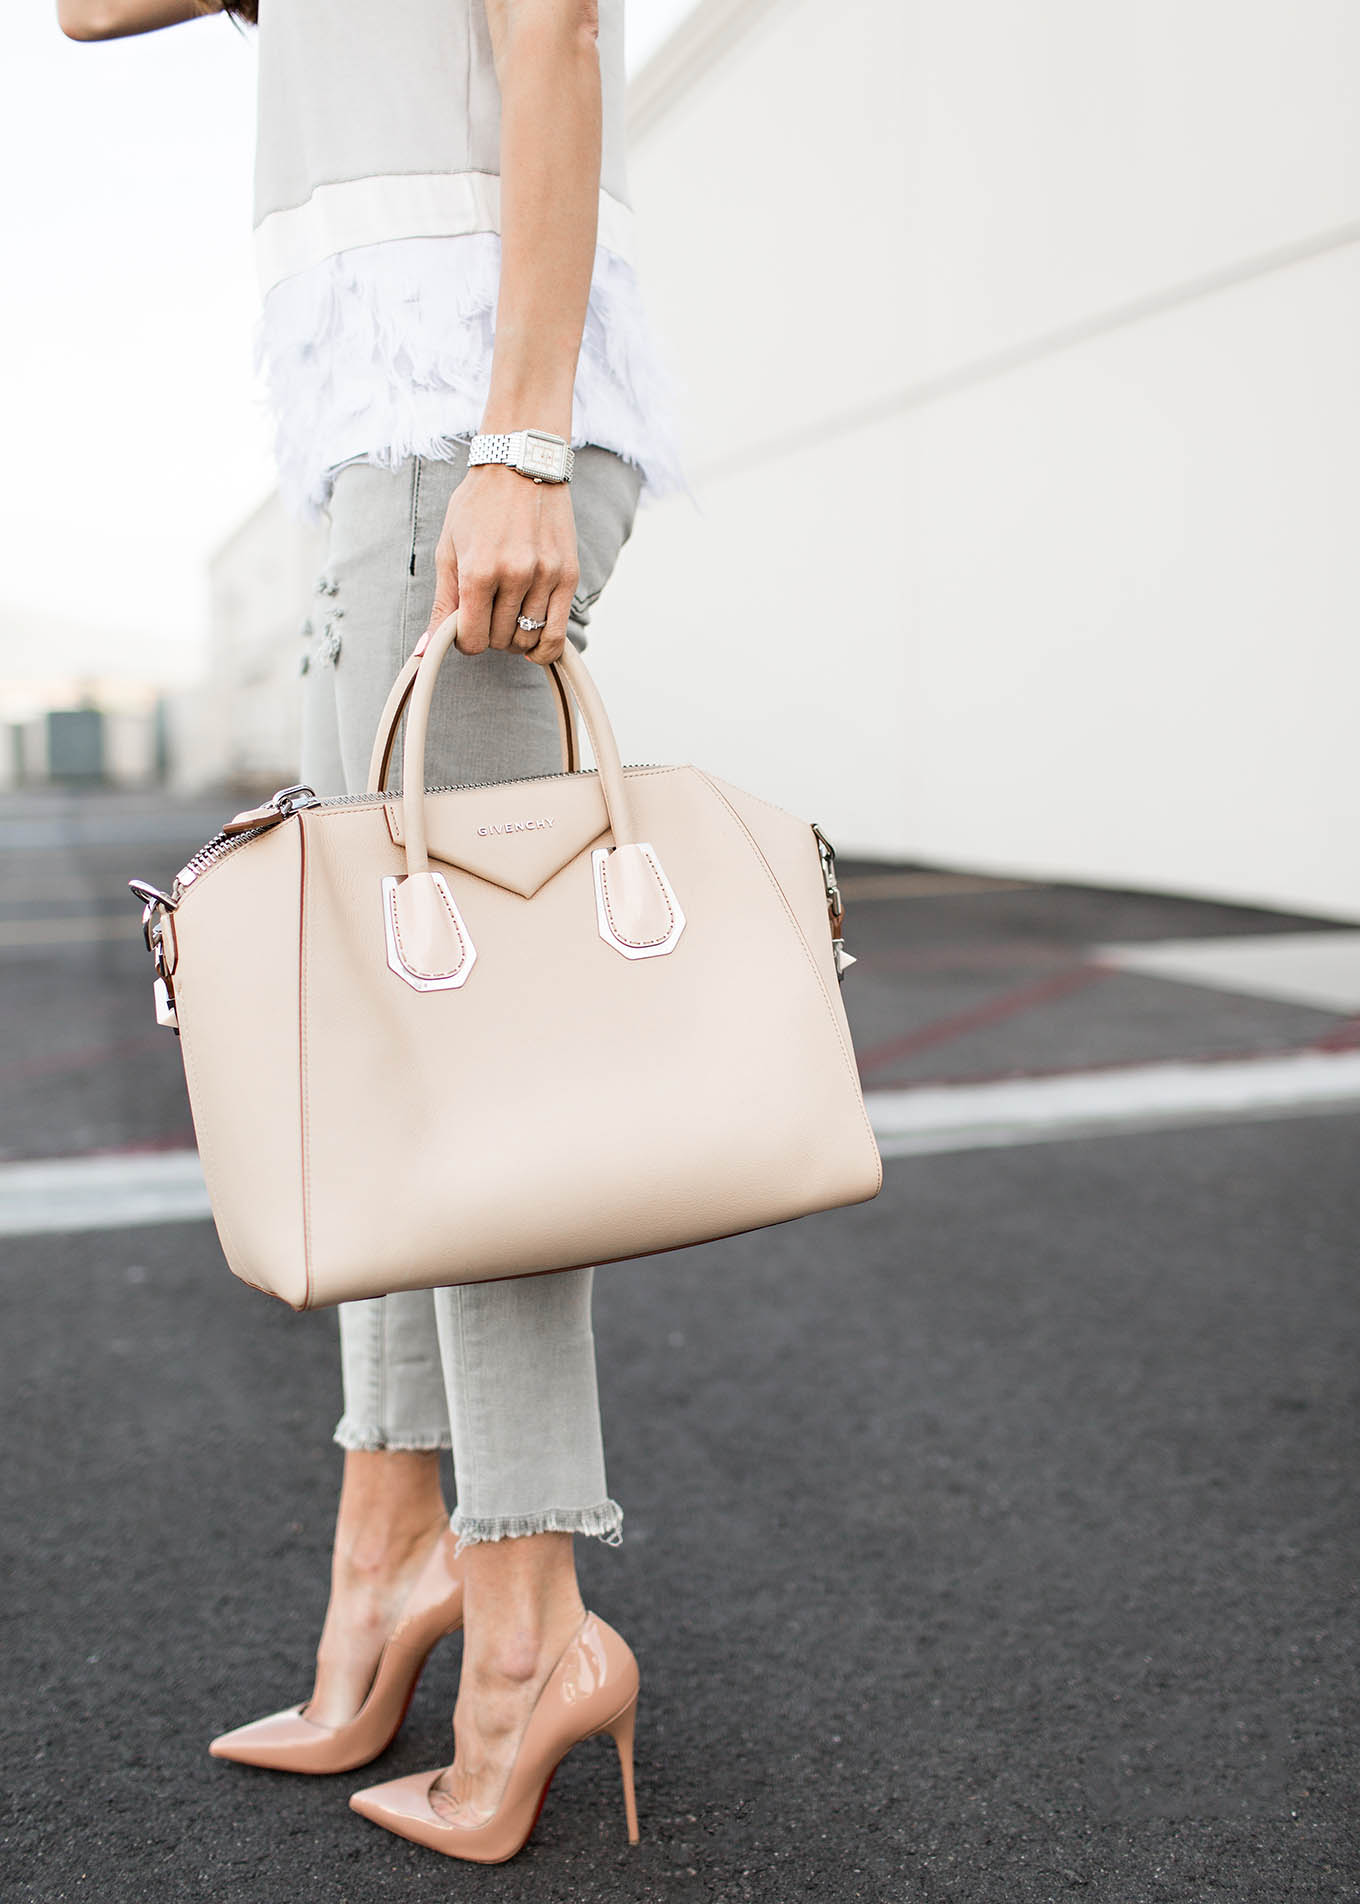 Givenchy Bag Hello fashion Blog